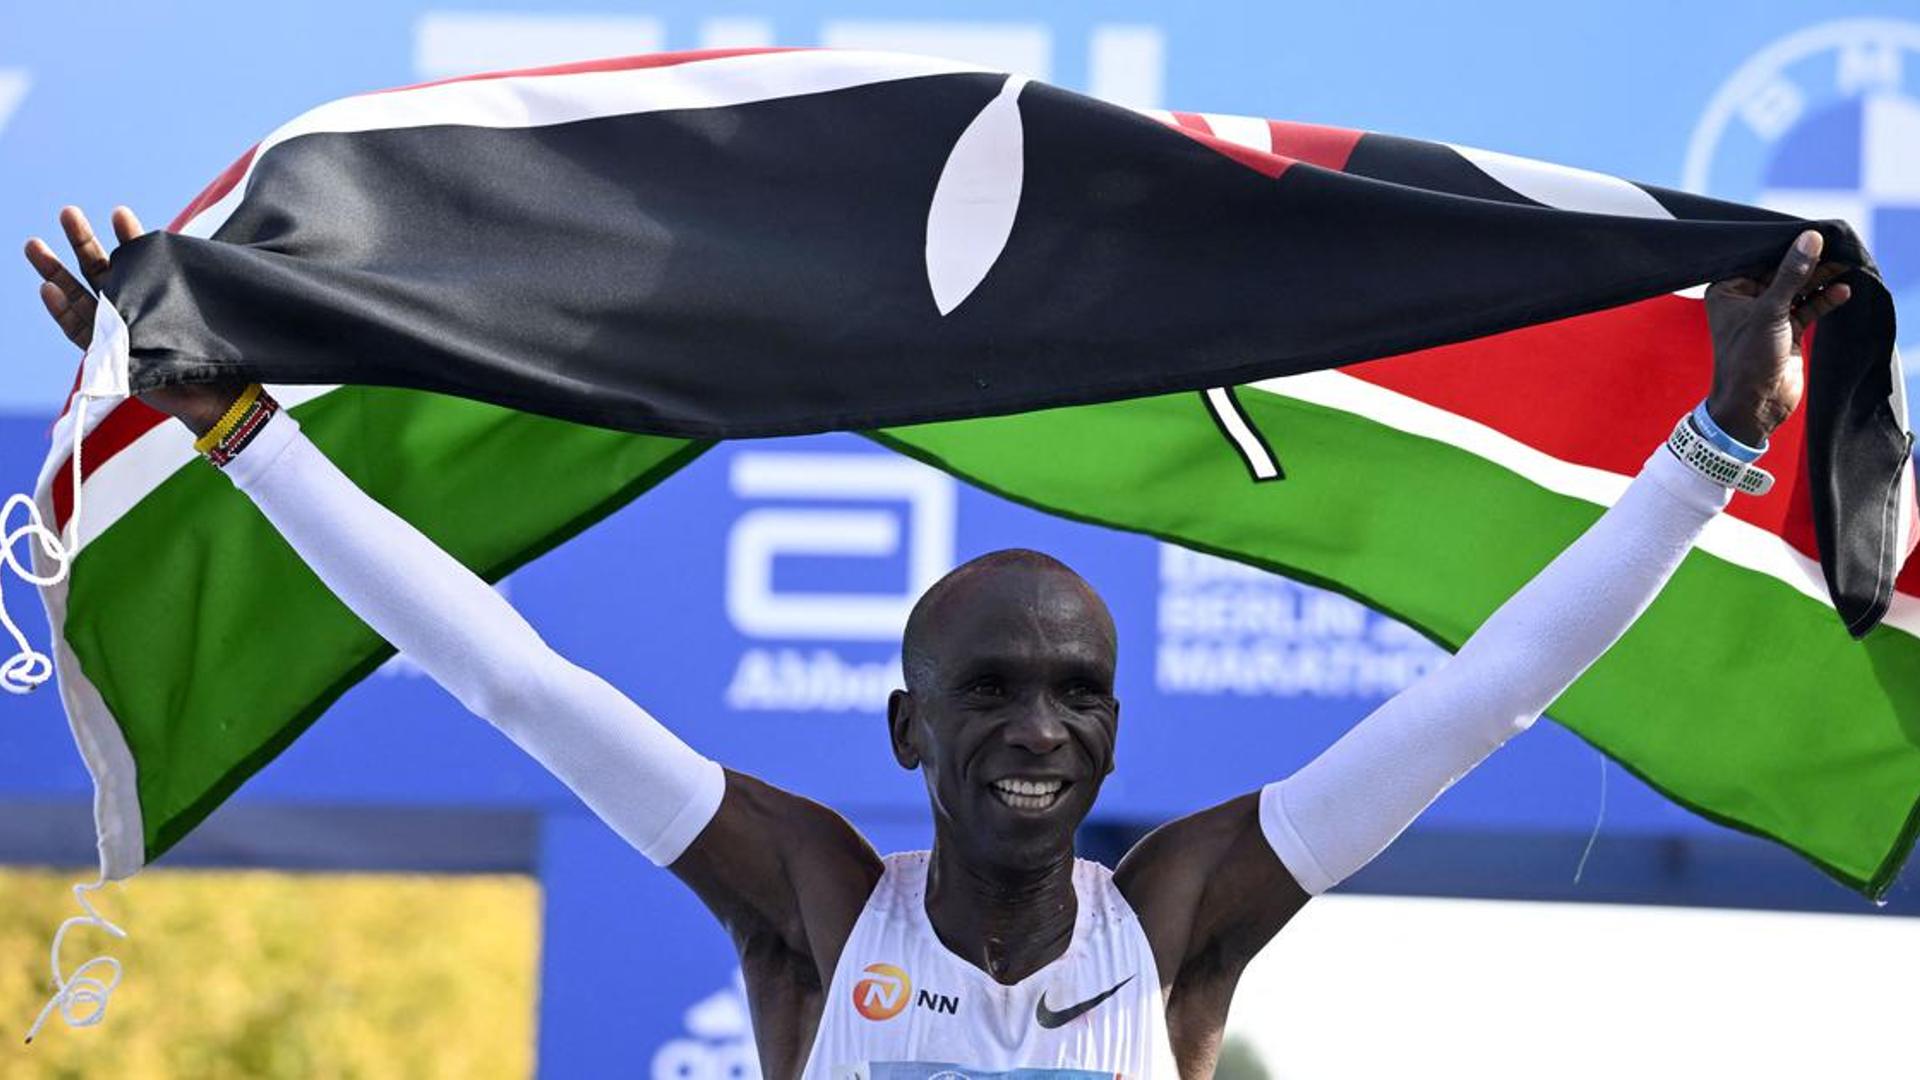 Eliud Kipchoge holding the Kenyan flag post his victory (Credits - Olympics.com)